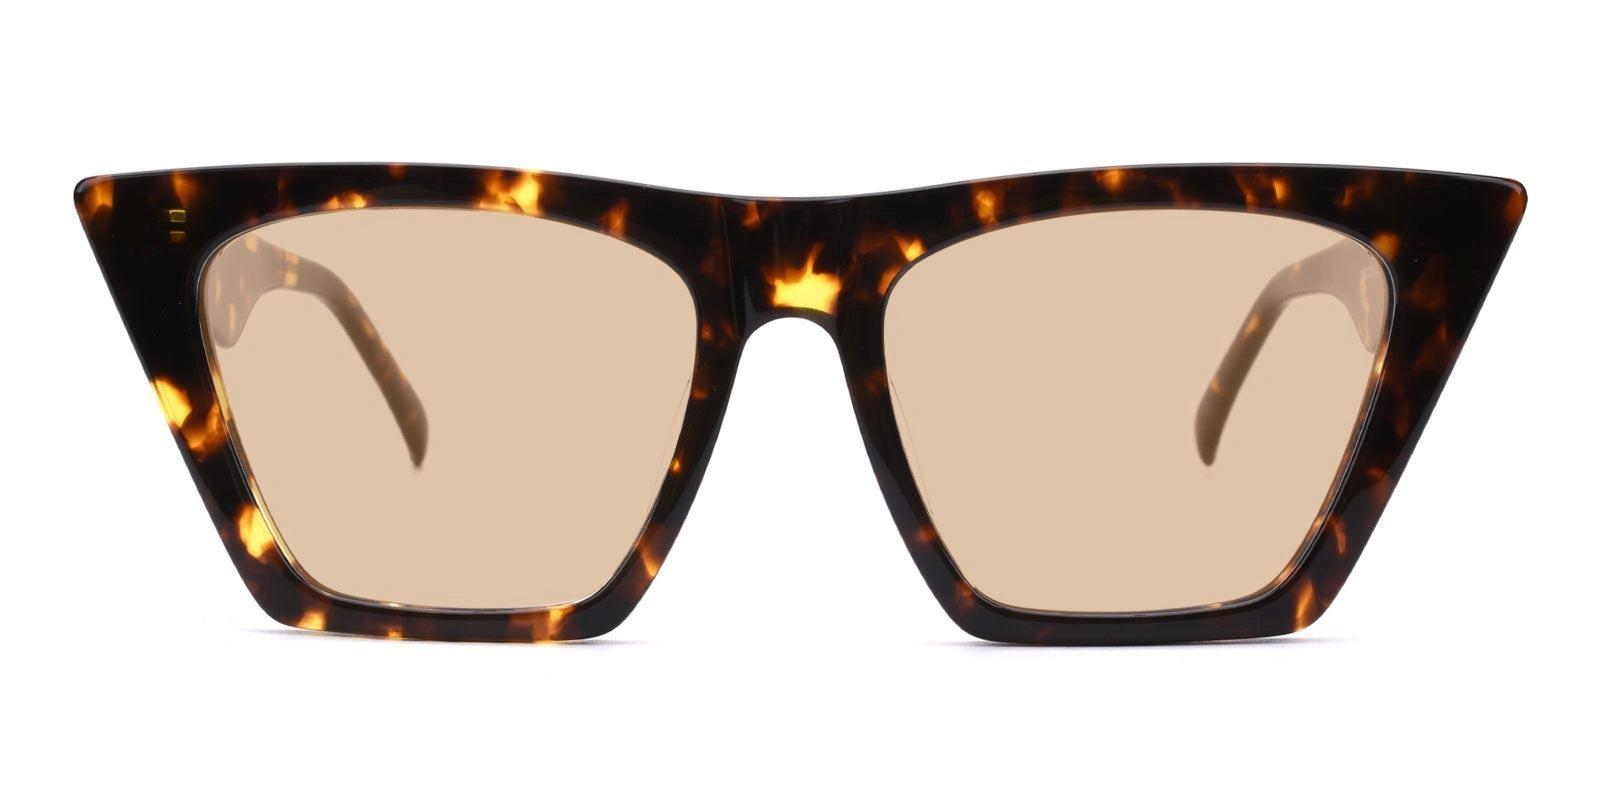 Igling Tortoise Acetate Sunglasses , UniversalBridgeFit Frames from ABBE Glasses